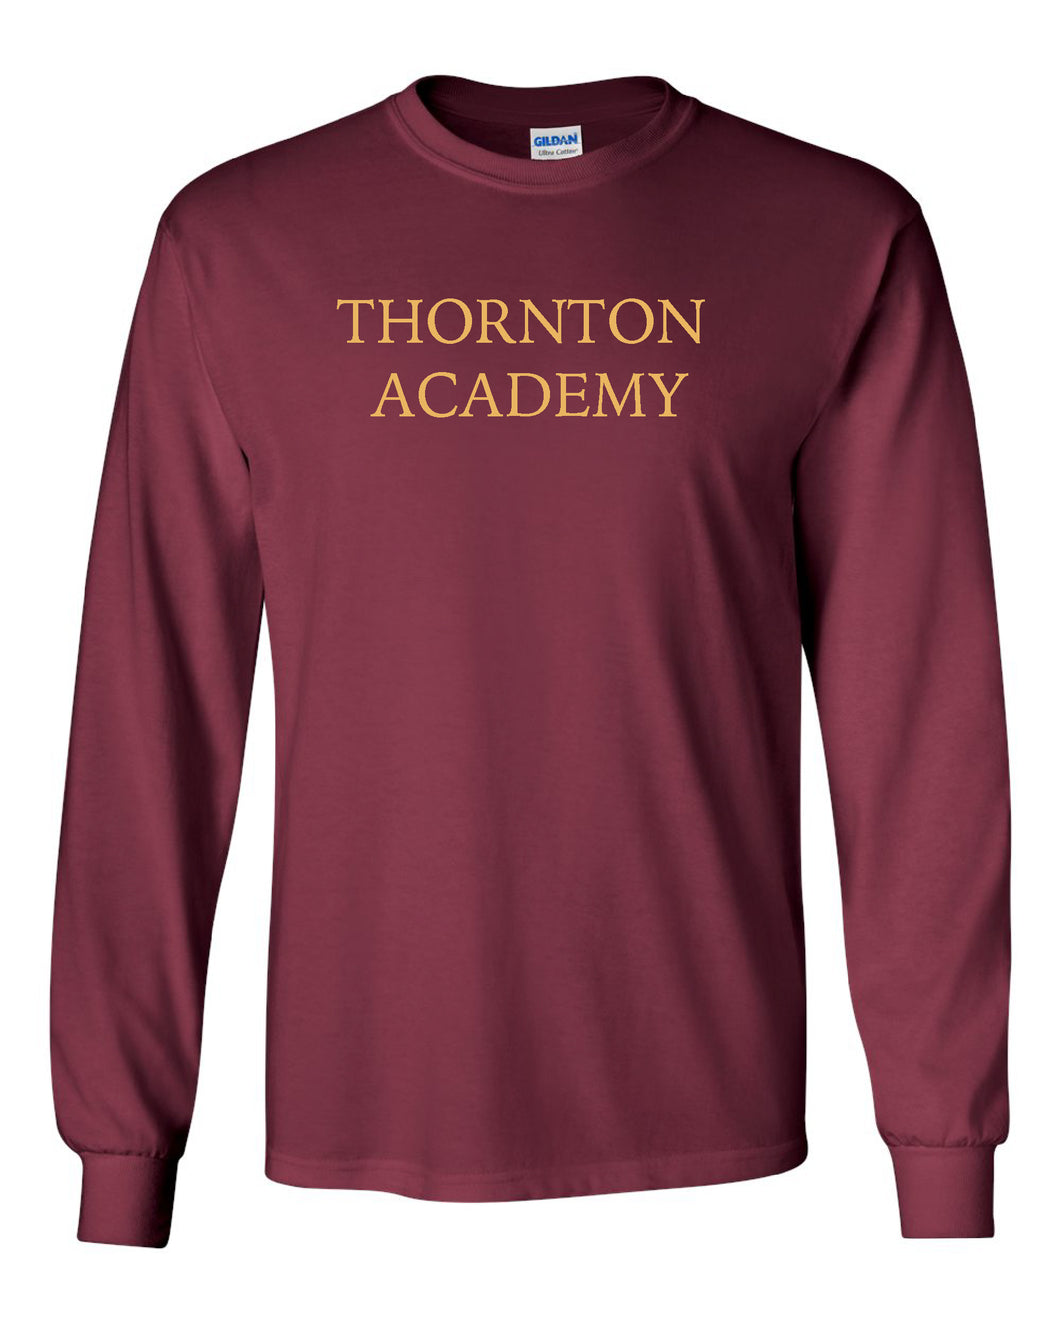 Long Sleeve Tshirt with Thornton Academy Gold Print (screen print)